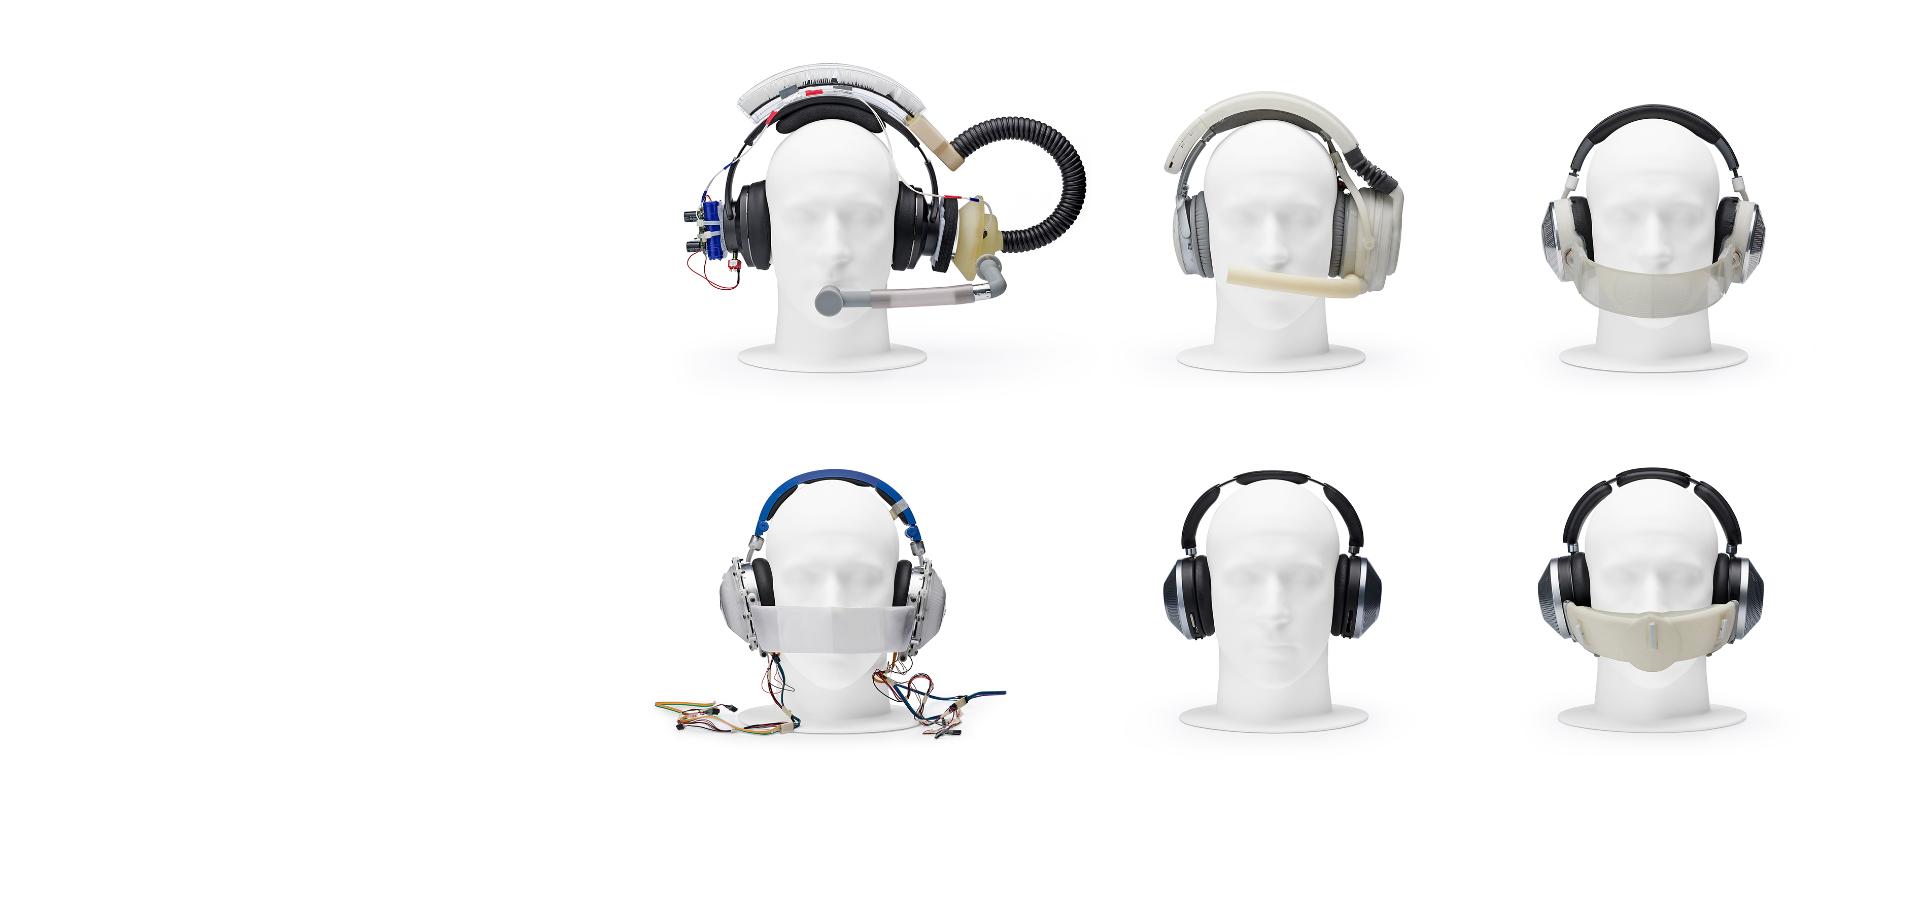 Manikin heads wearing various prototype headphones